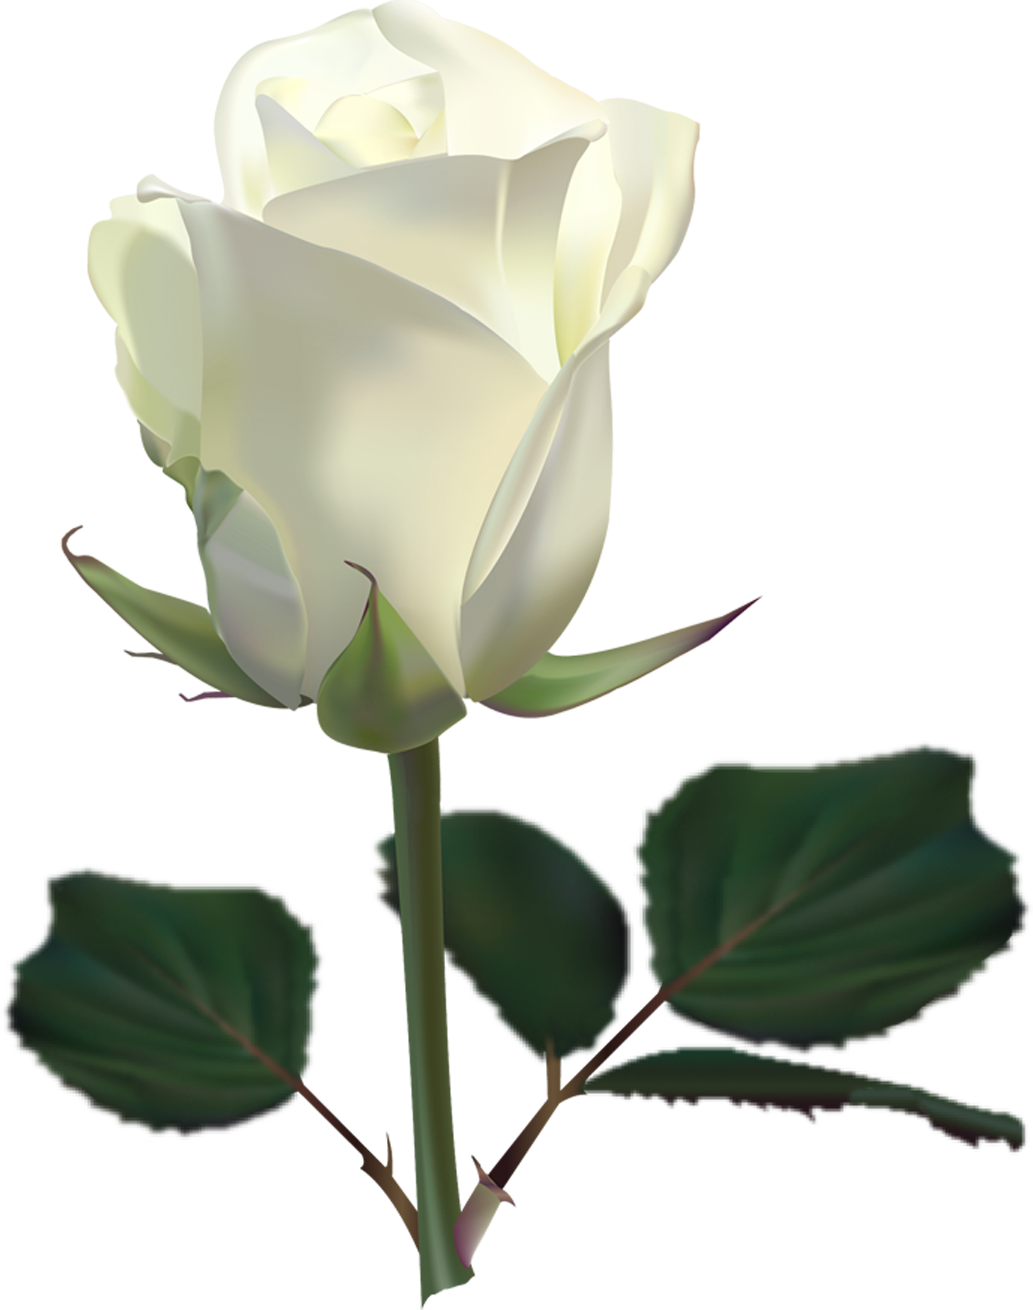 fantastic white rose image